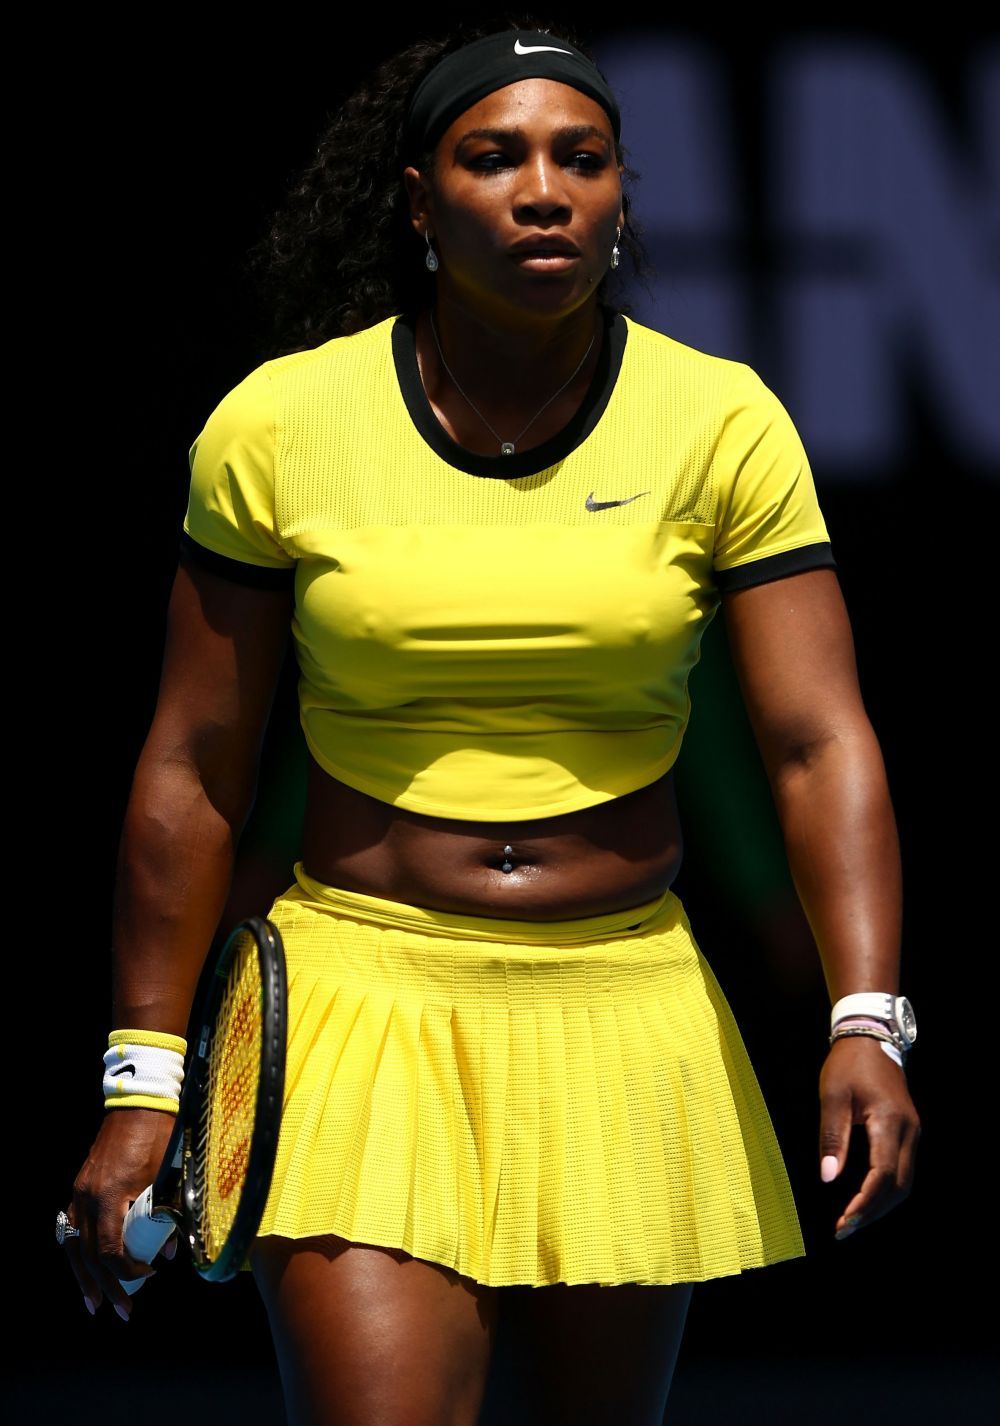 Alegere indrazneata pentru Serena Williams. Tinuta excentrica cu care sportiva a aparut pe teren la Australian Open